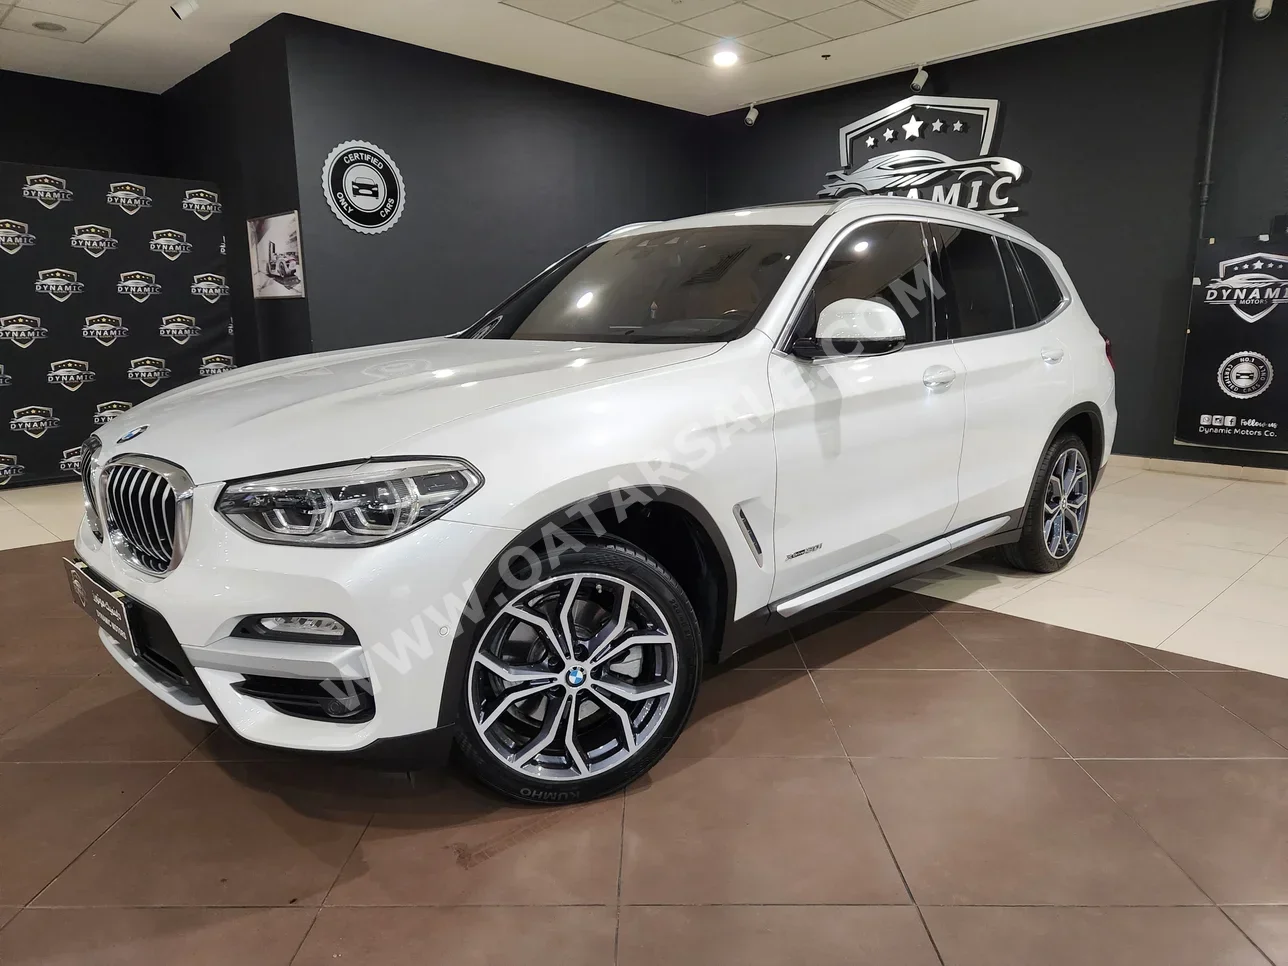 BMW  X-Series  X3  2018  Automatic  98,000 Km  6 Cylinder  All Wheel Drive (AWD)  SUV  White  With Warranty